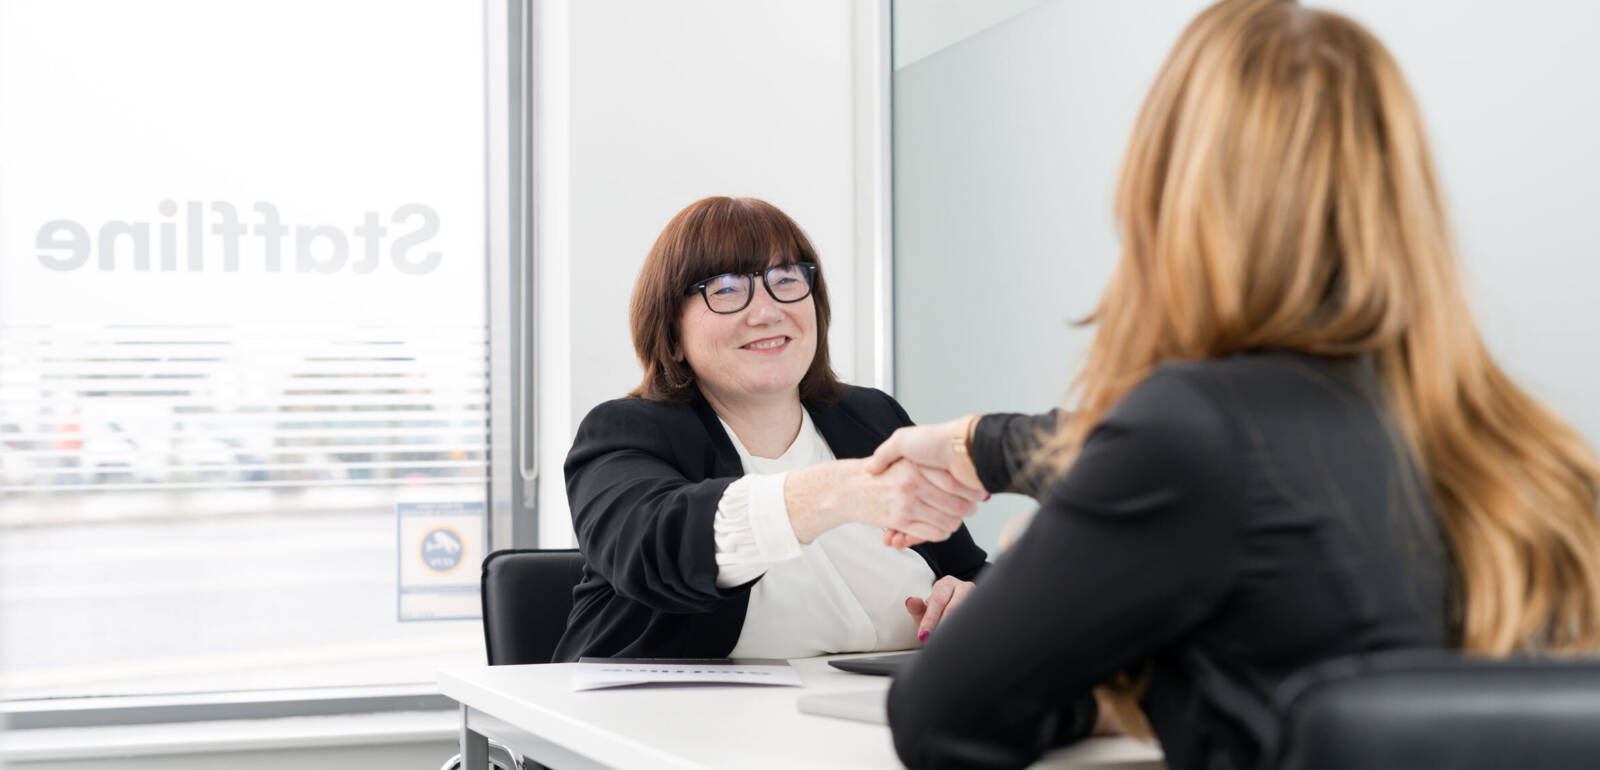 Two women shaking hands in a Staffline office space